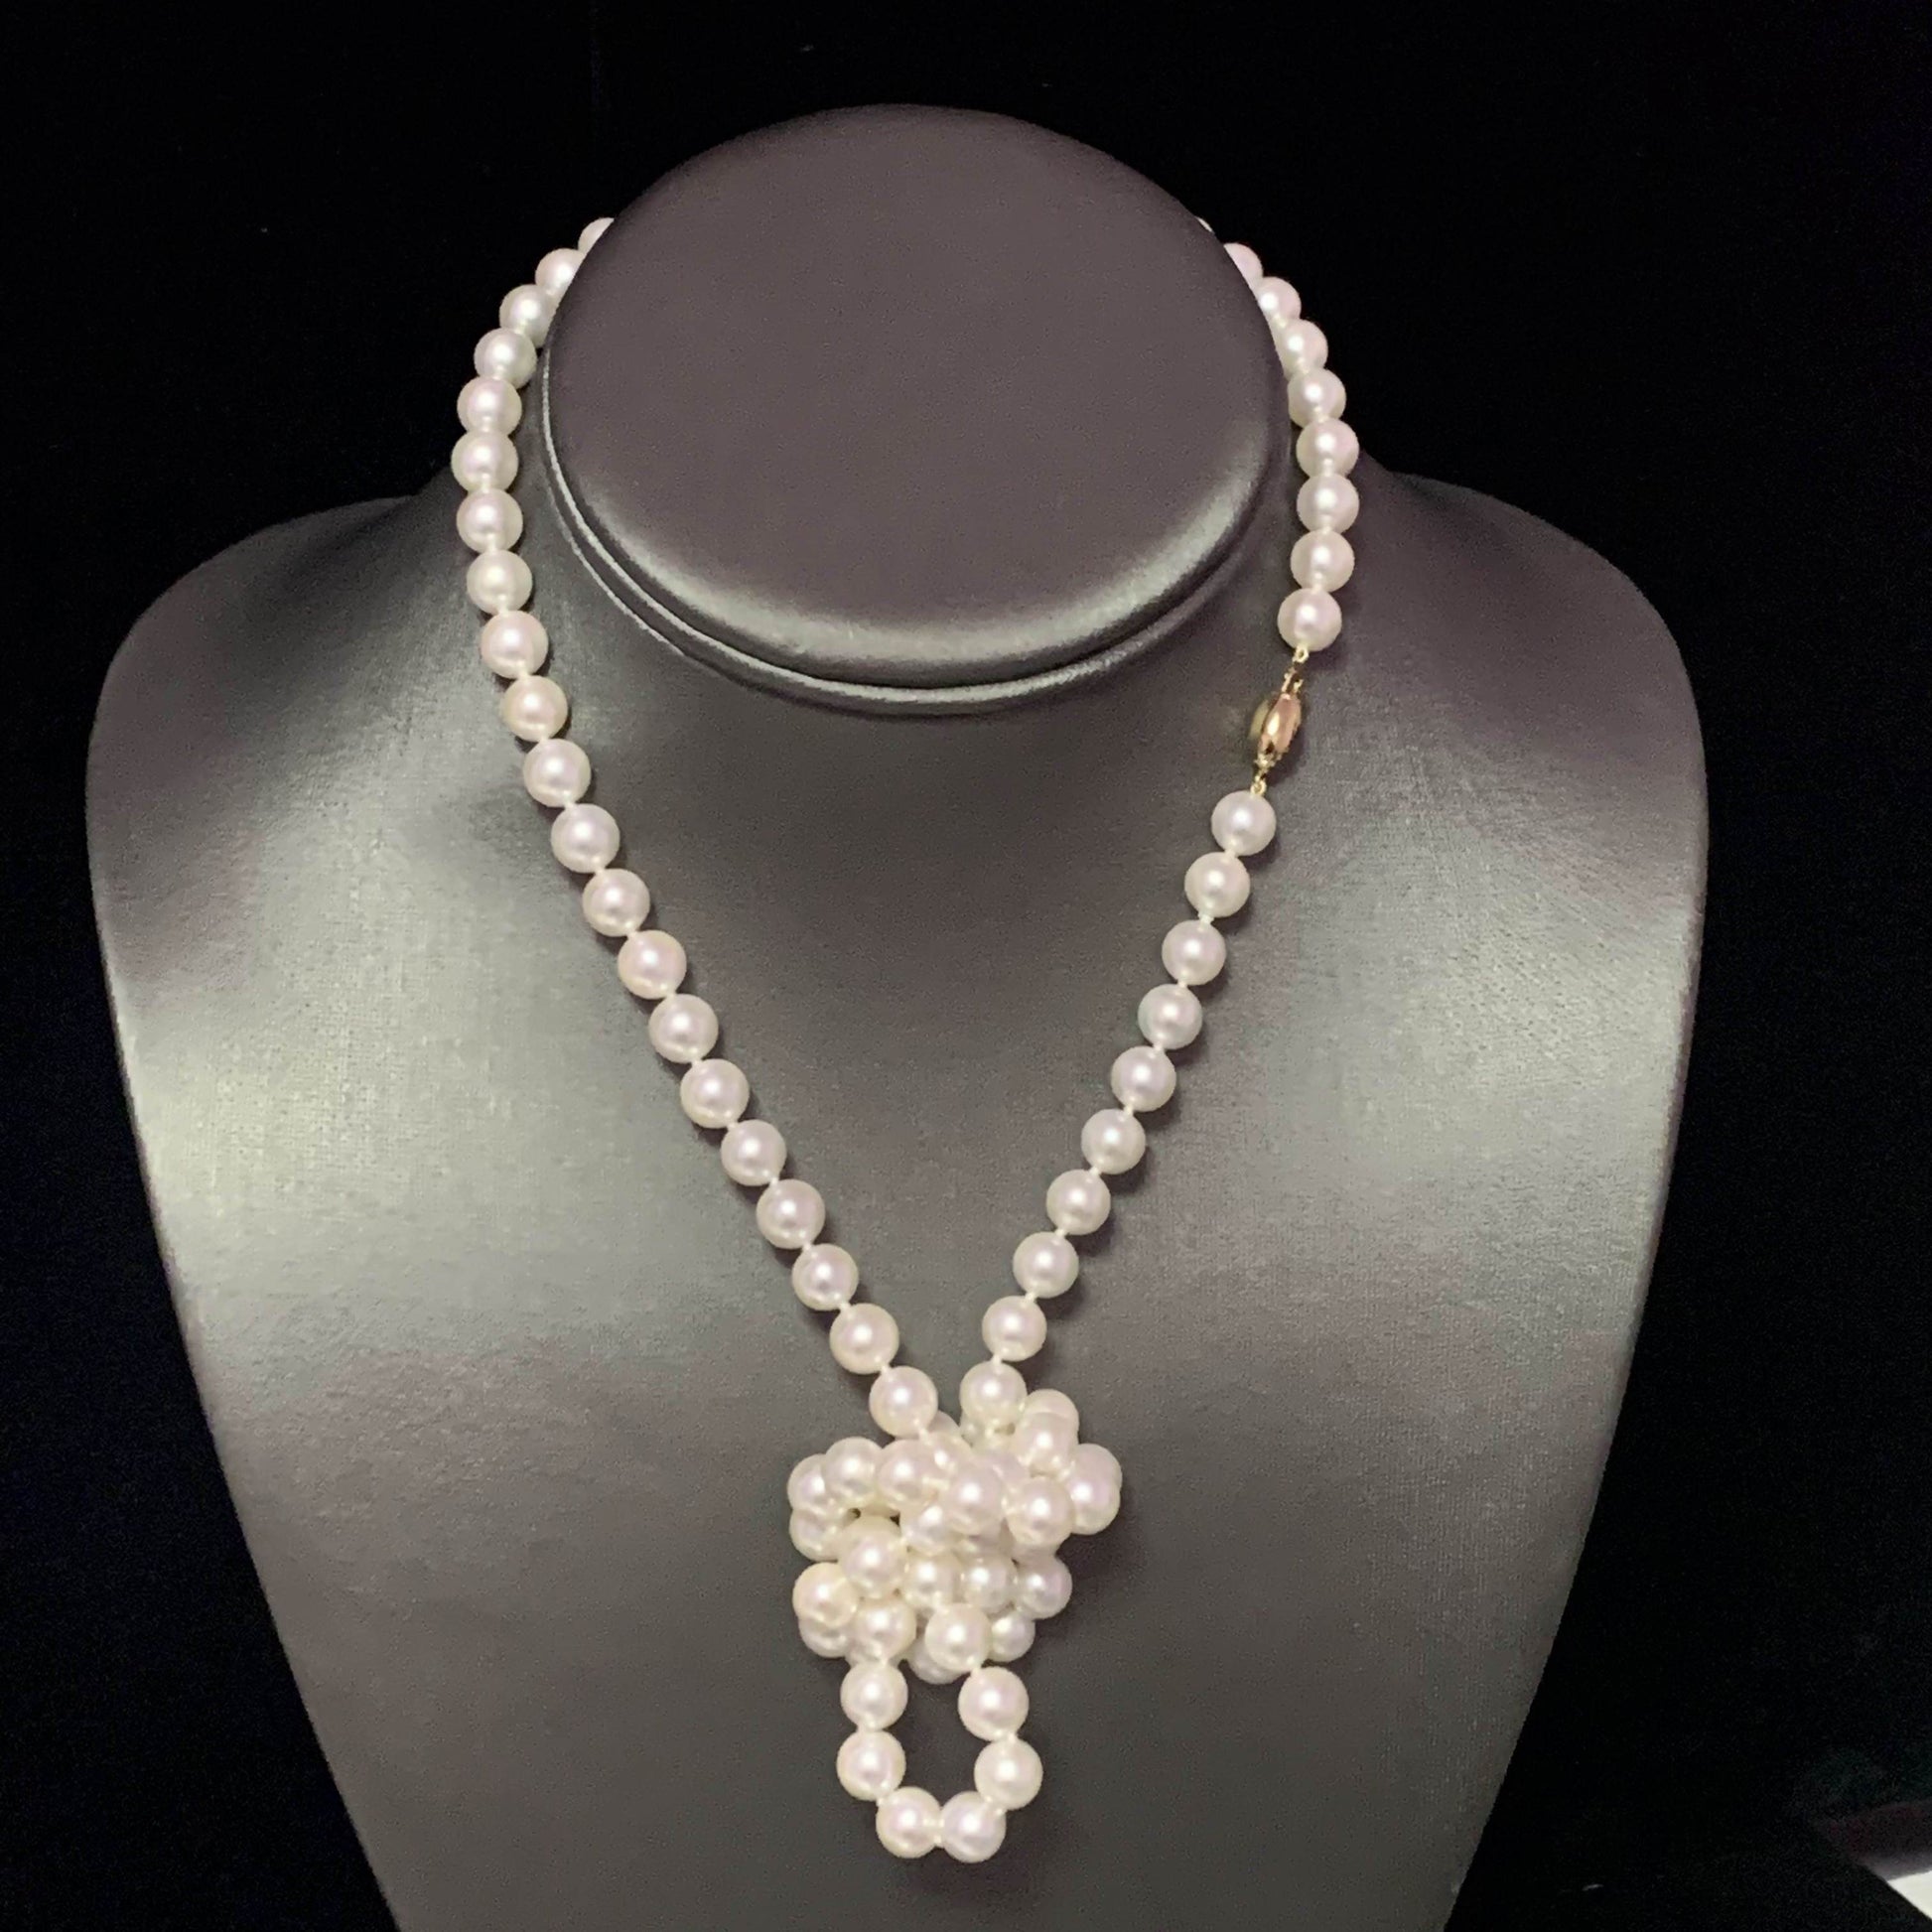 Akoya Pearl Necklace 14k Gold 27" 7.5 mm Certified $3,475 113100 - Certified Fine Jewelry